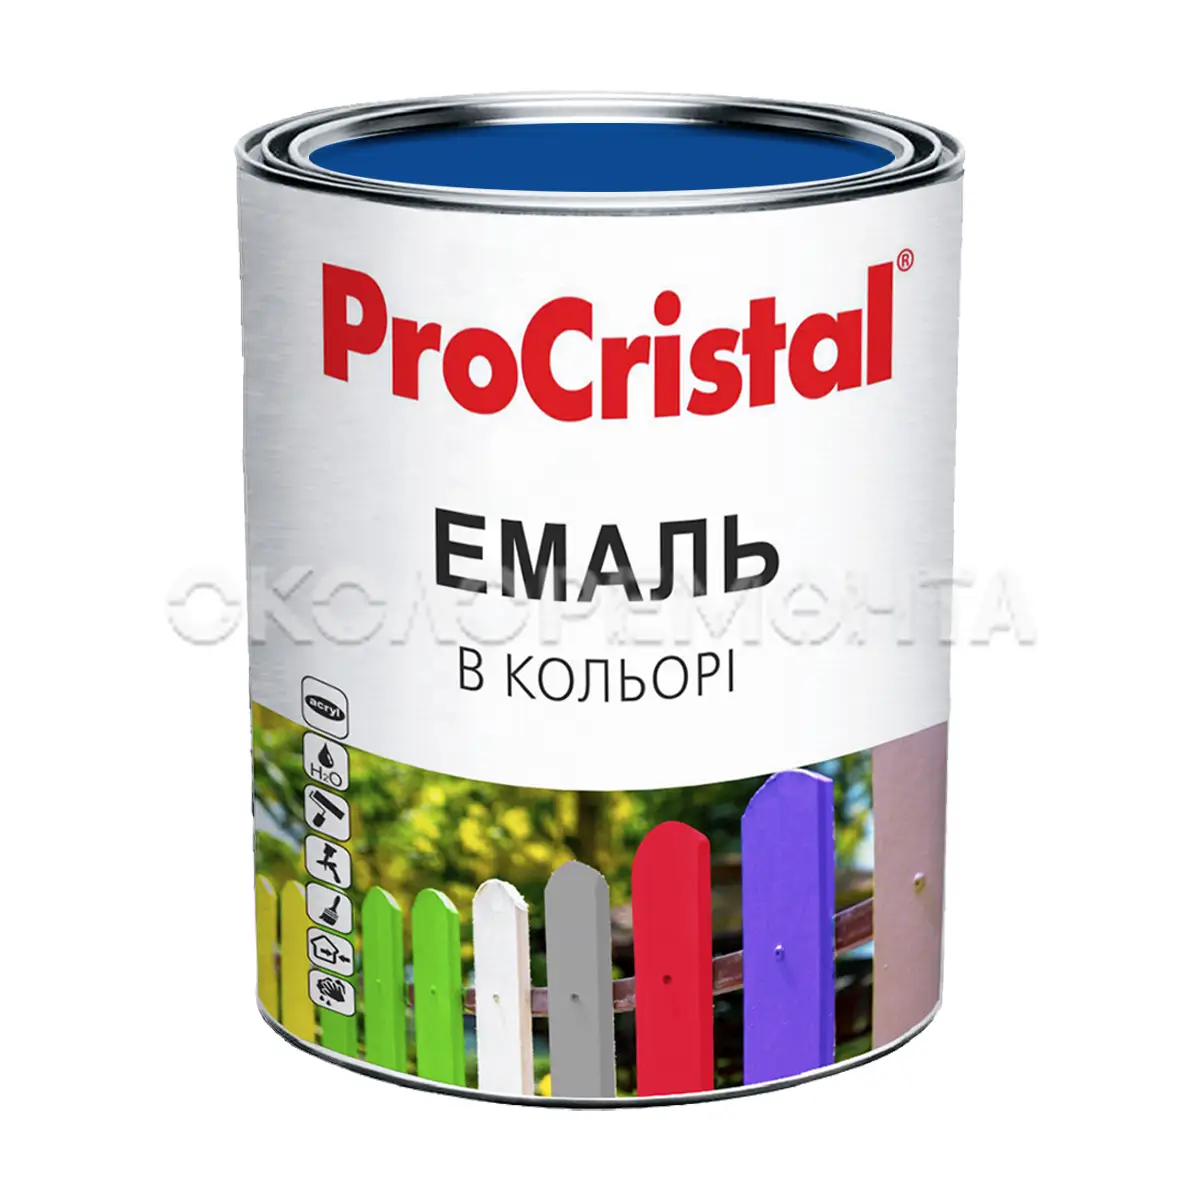 ProCristal